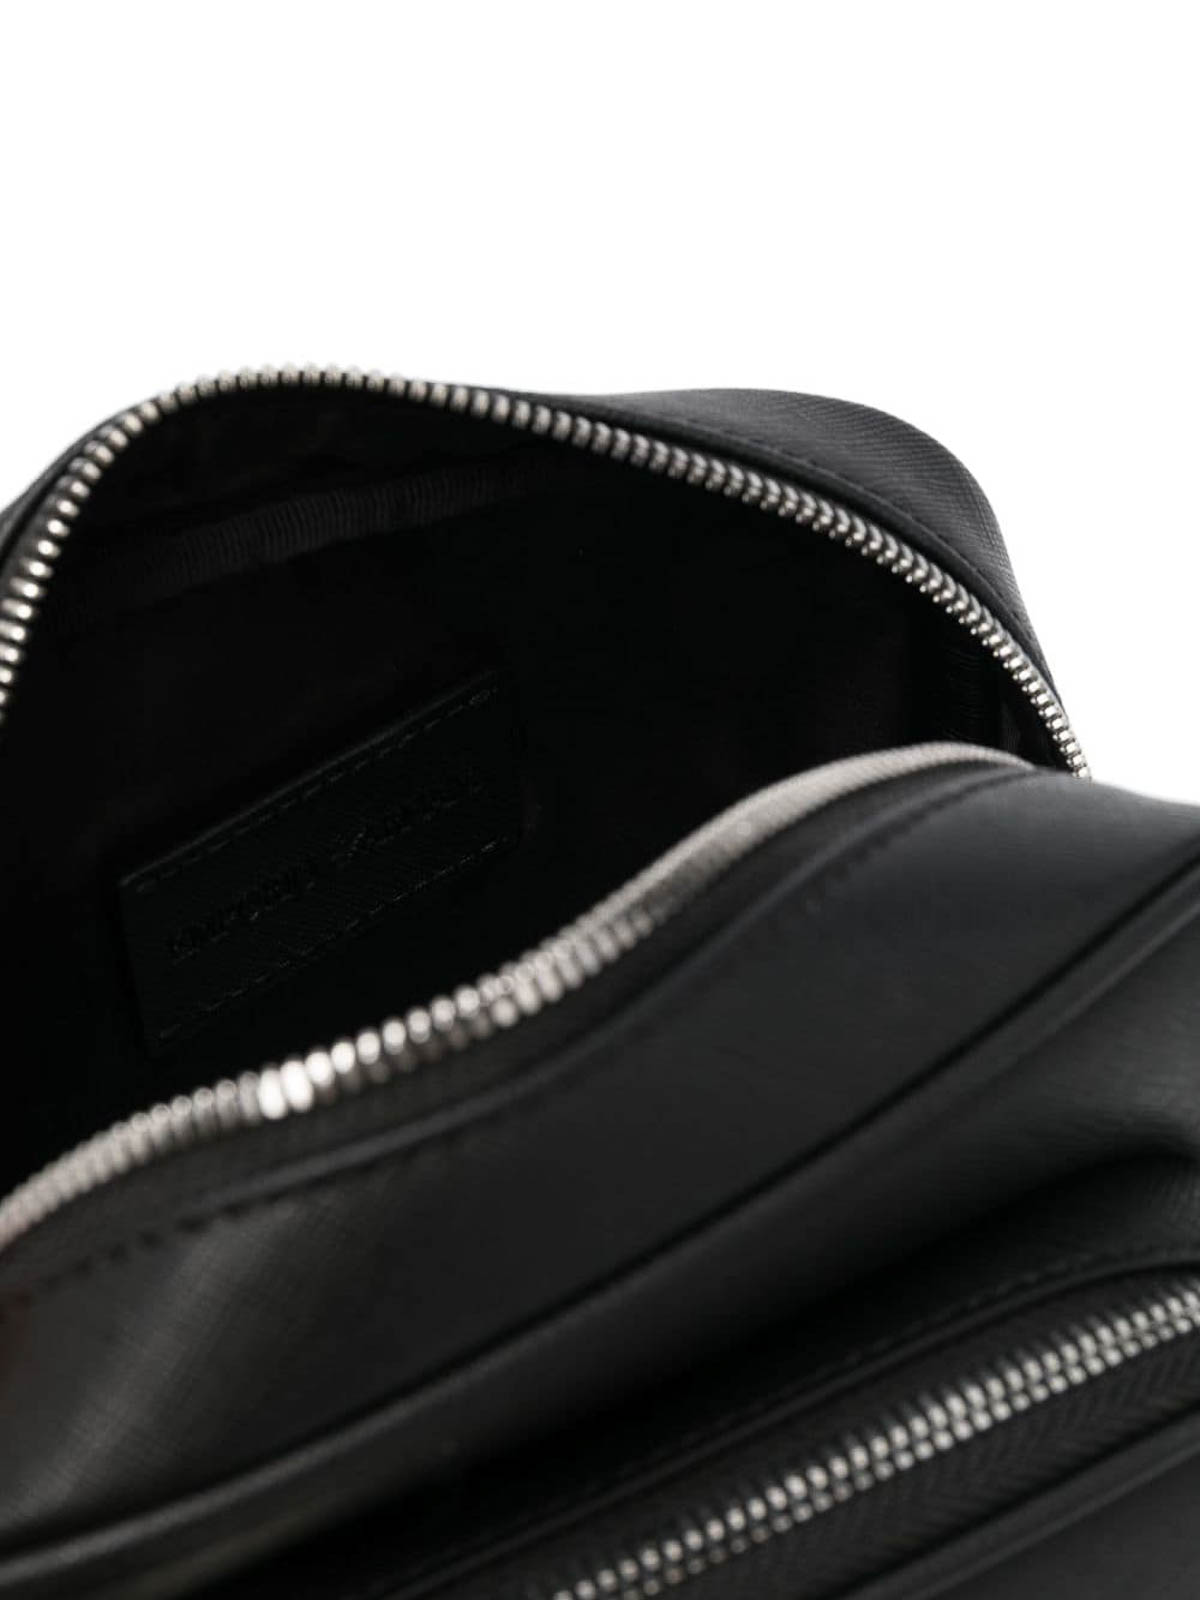 Shop Emporio Armani Leather Crossbody Bag In Black